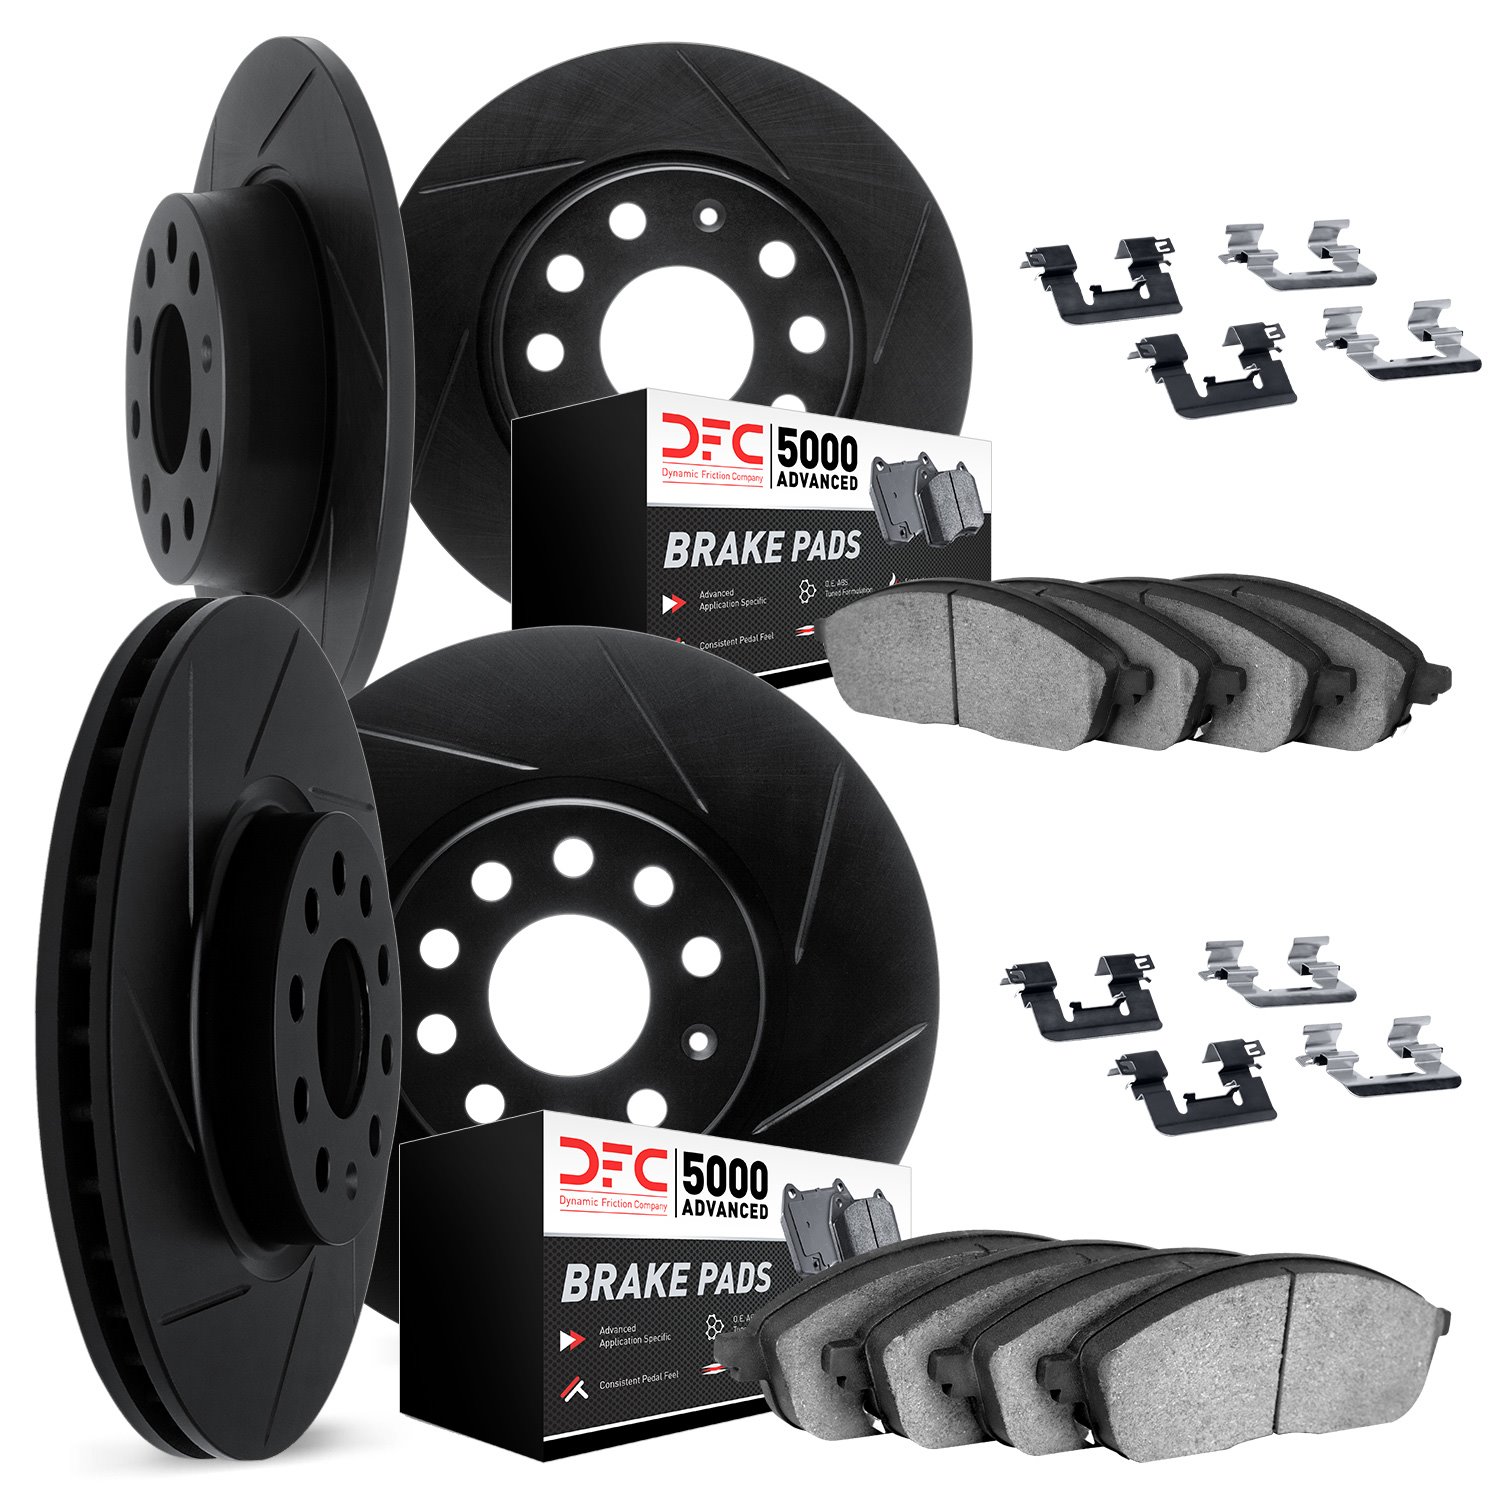 3514-54085 Slotted Brake Rotors w/5000 Advanced Brake Pads Kit & Hardware [Black], 2011-2015 Ford/Lincoln/Mercury/Mazda, Positio